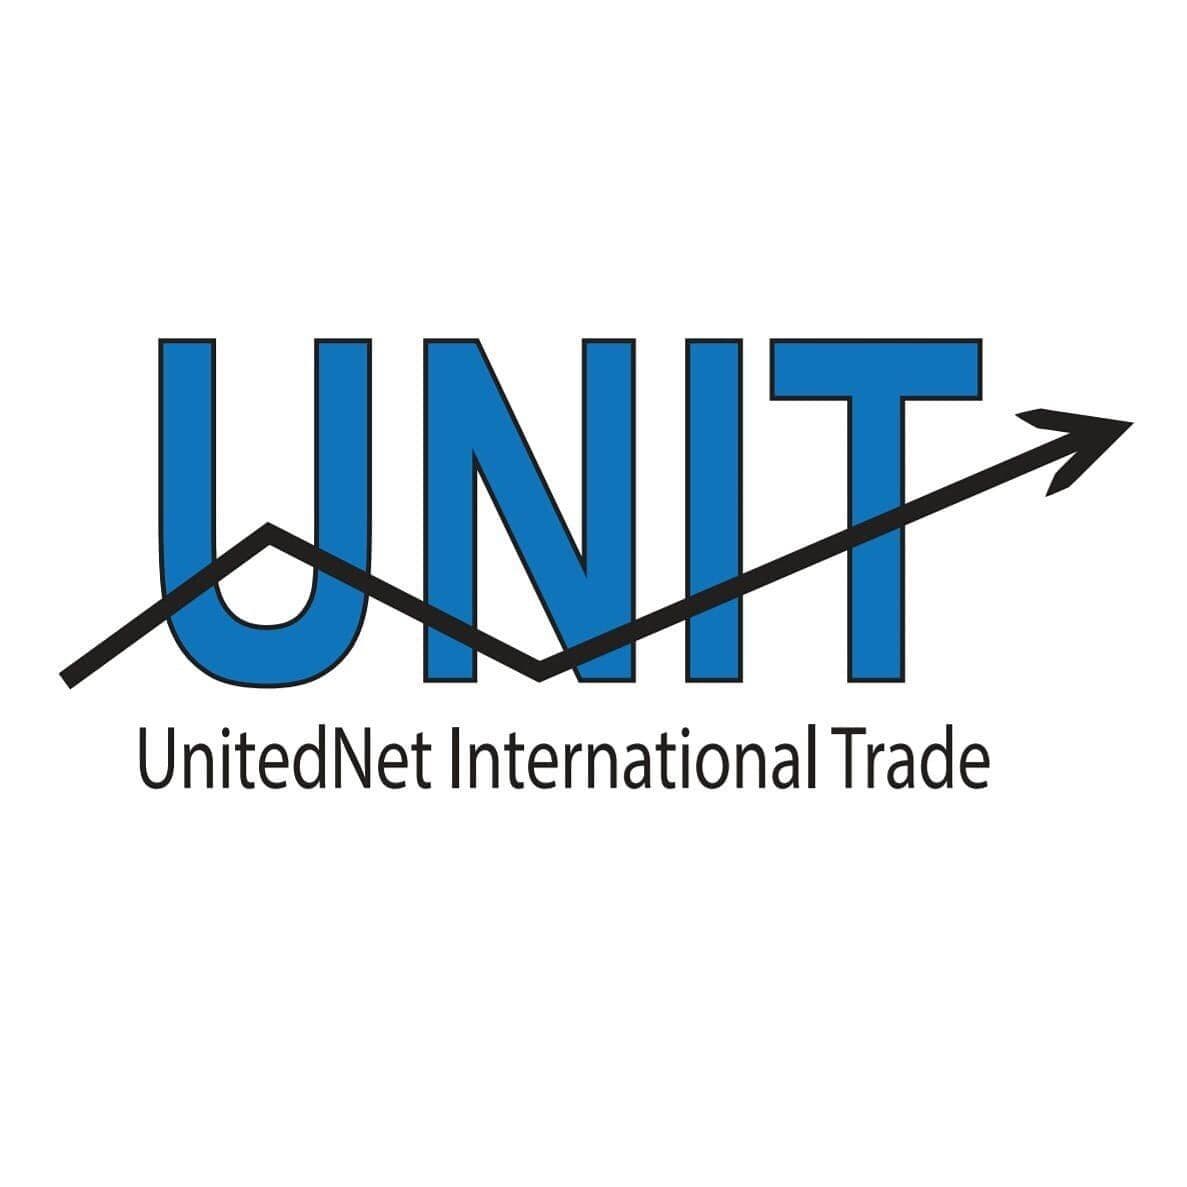 UnitedNet International trade